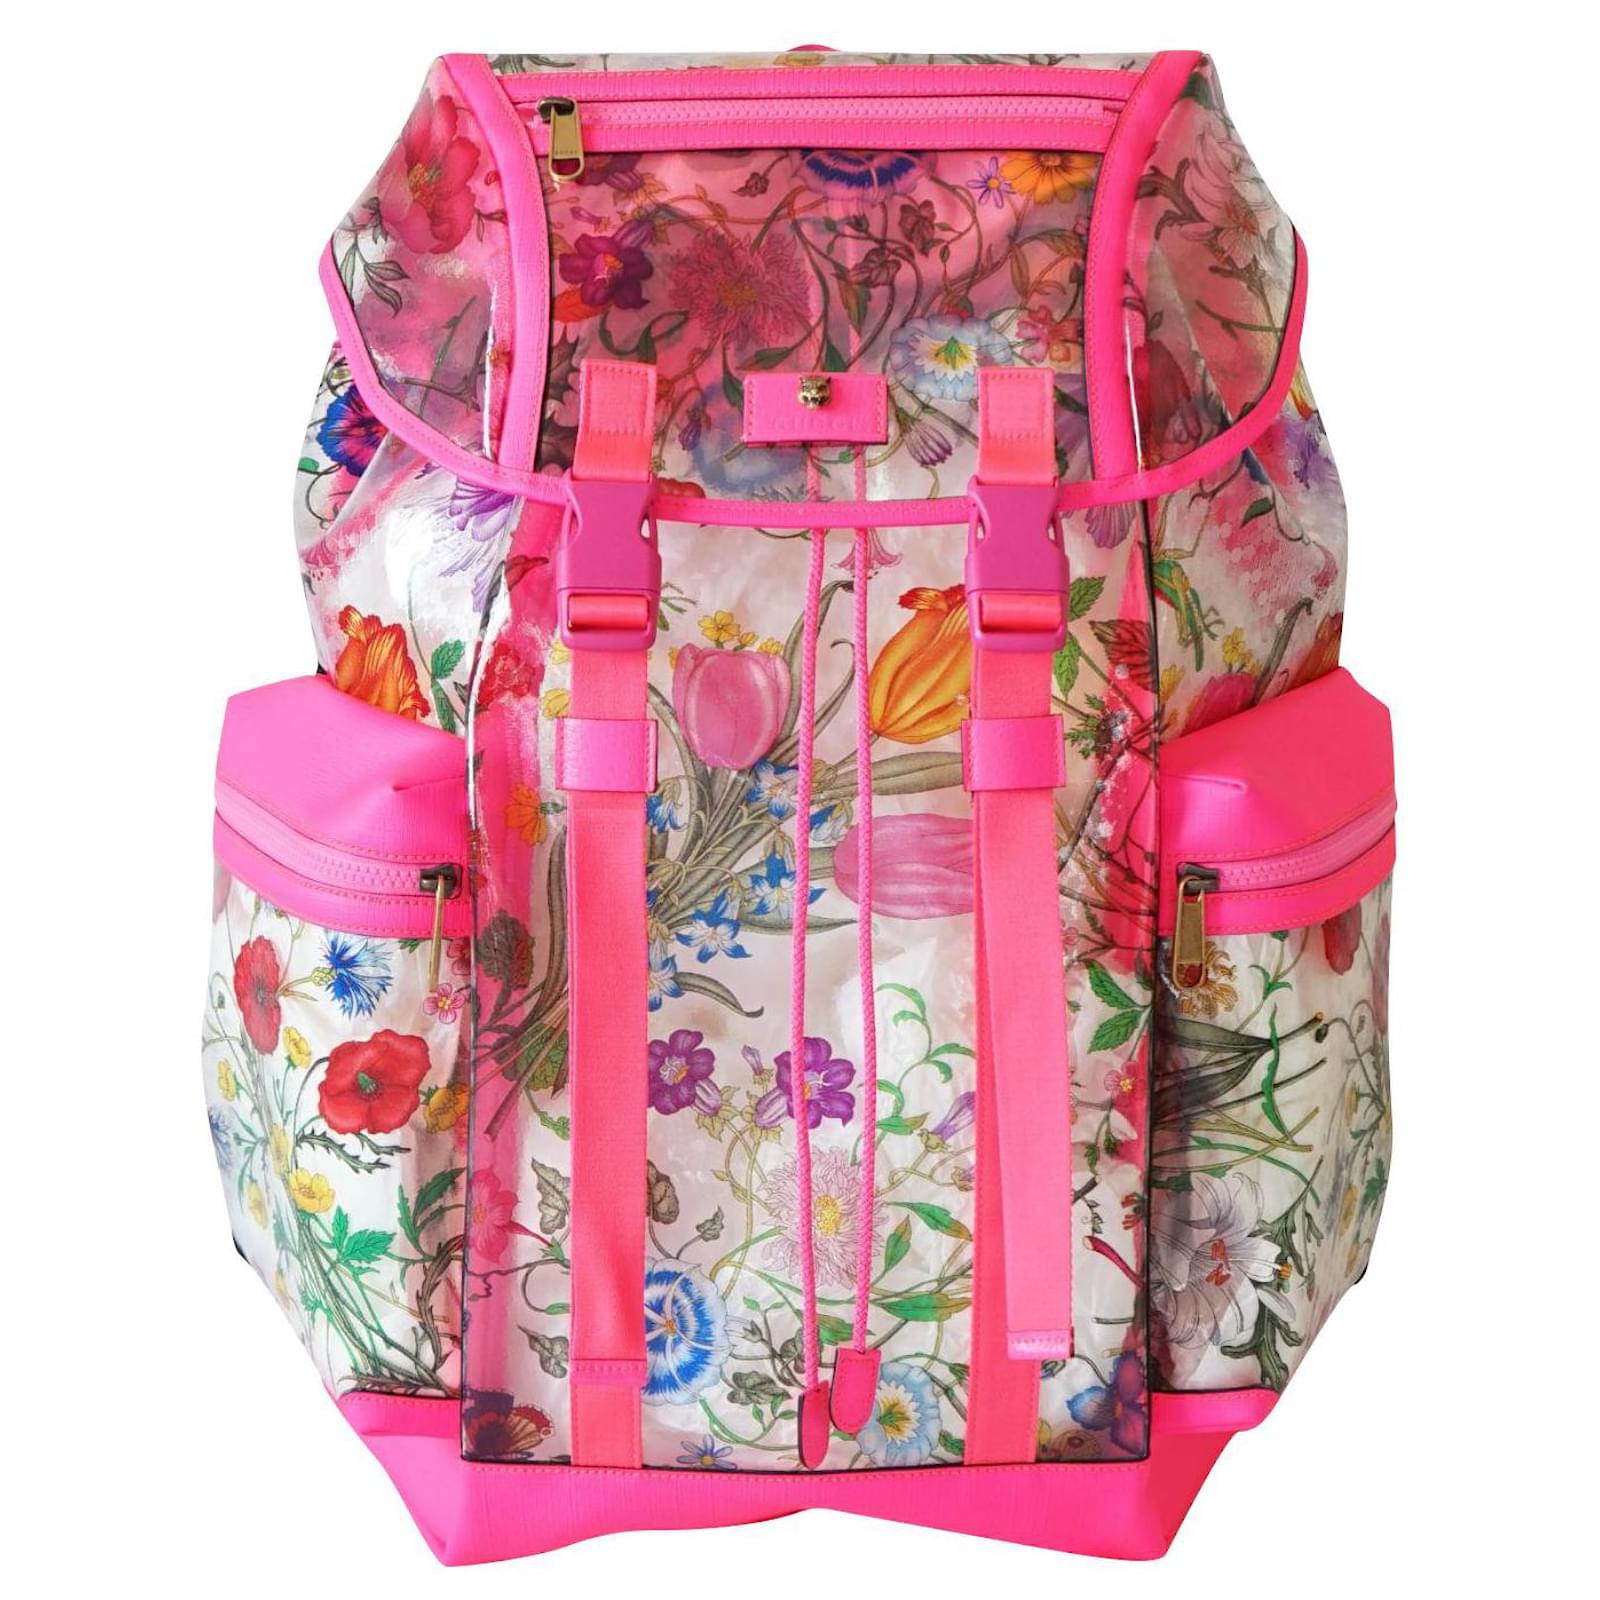 Gucci Pink Backpacks